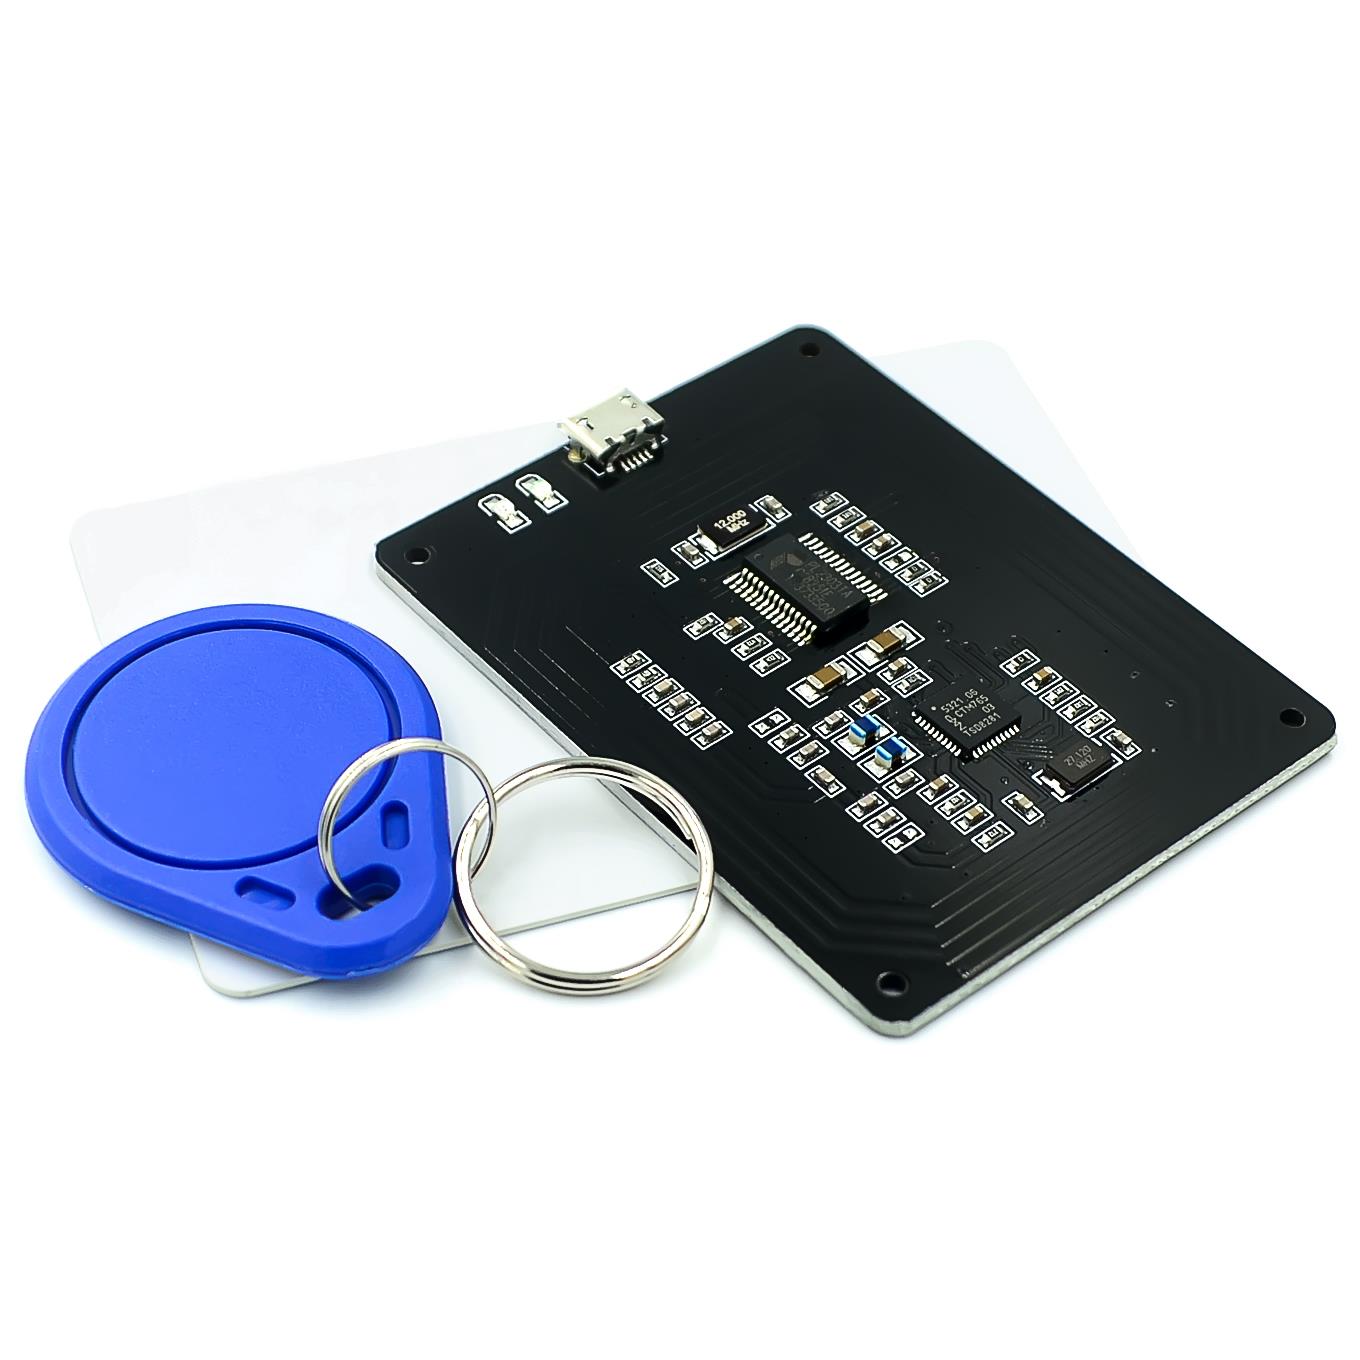 PN532 Serial Port Transceiver Wireless Module Card Reader Accessories Black